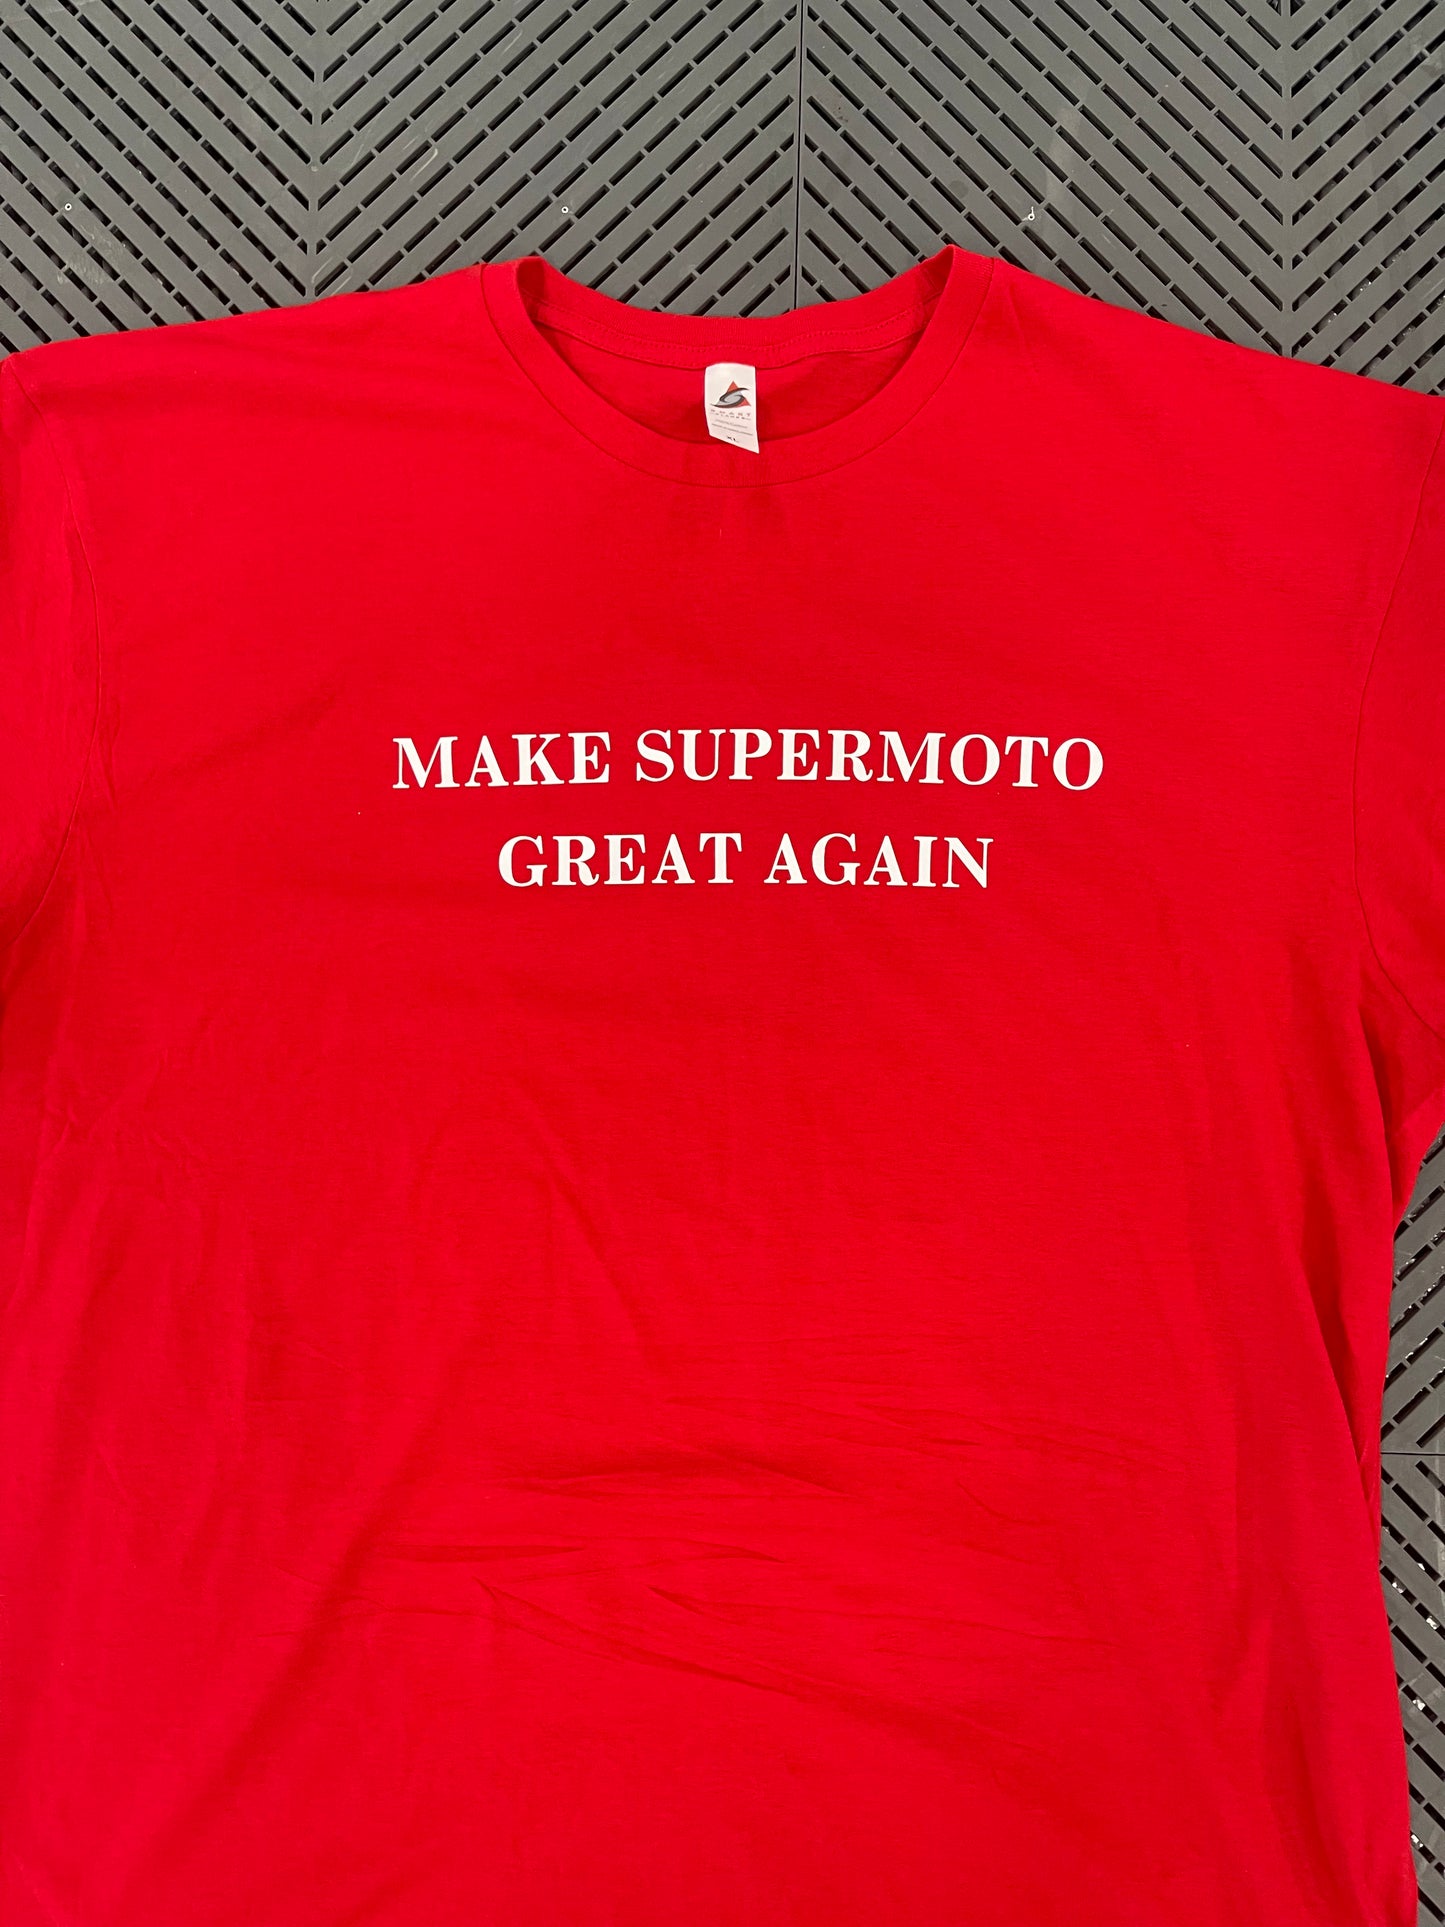 Make supermoto great again shirt